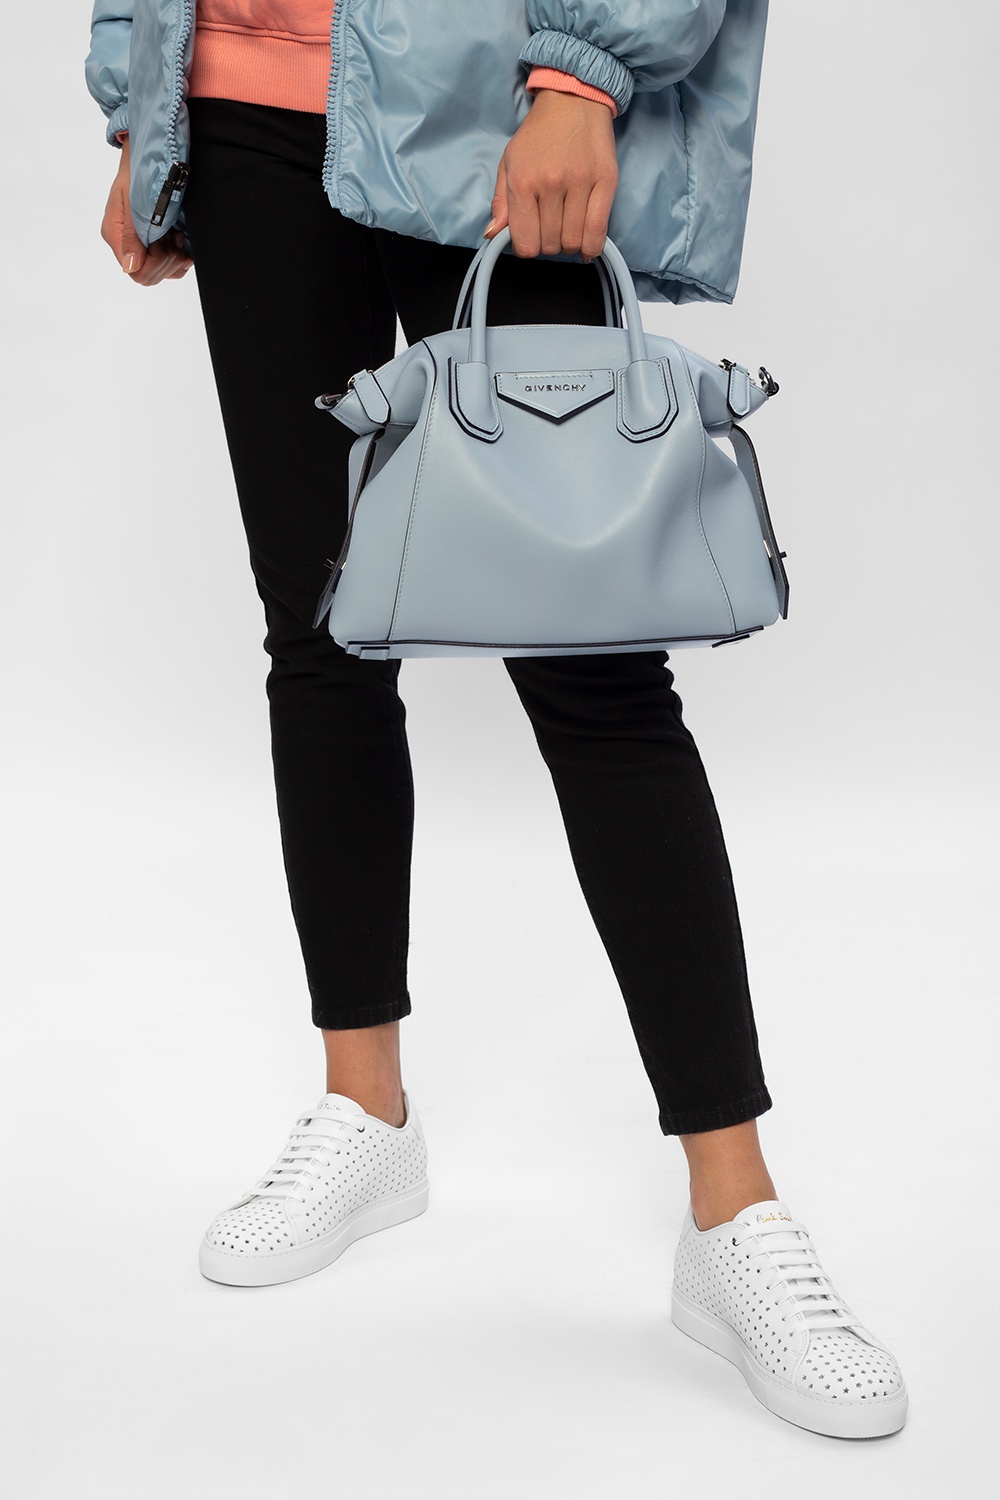 Givenchy 'Antigona Small' shoulder bag